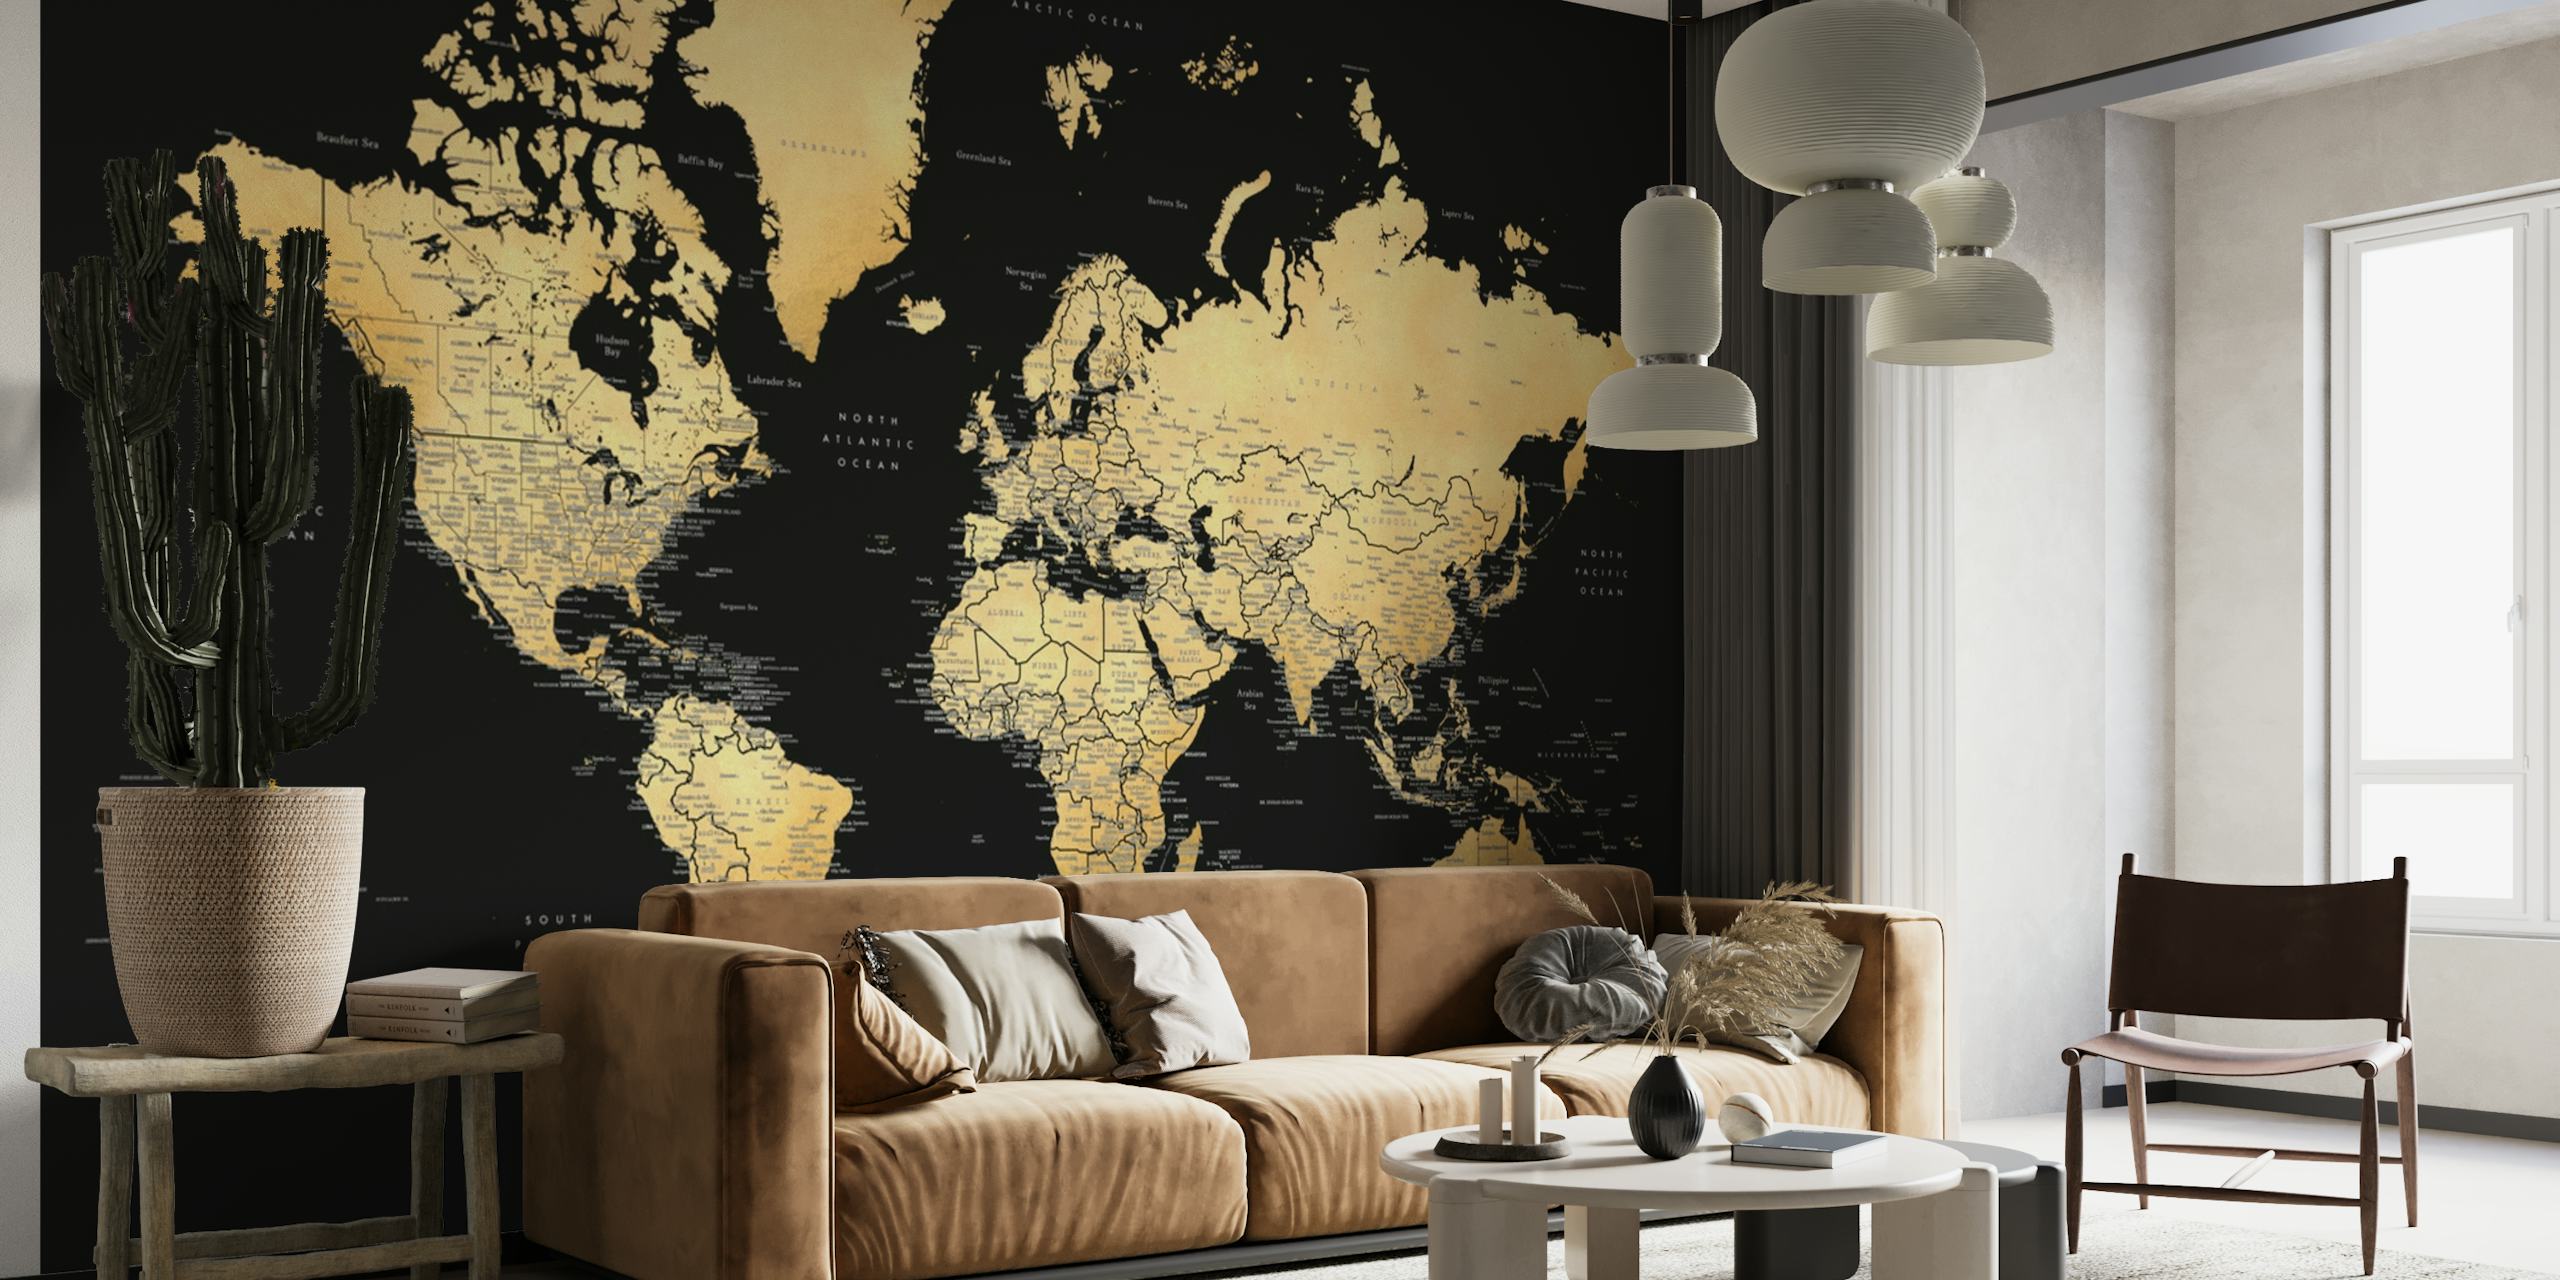 Elegant vægmaleri på verdenskort i rige sepia-toner med detaljerede etiketter